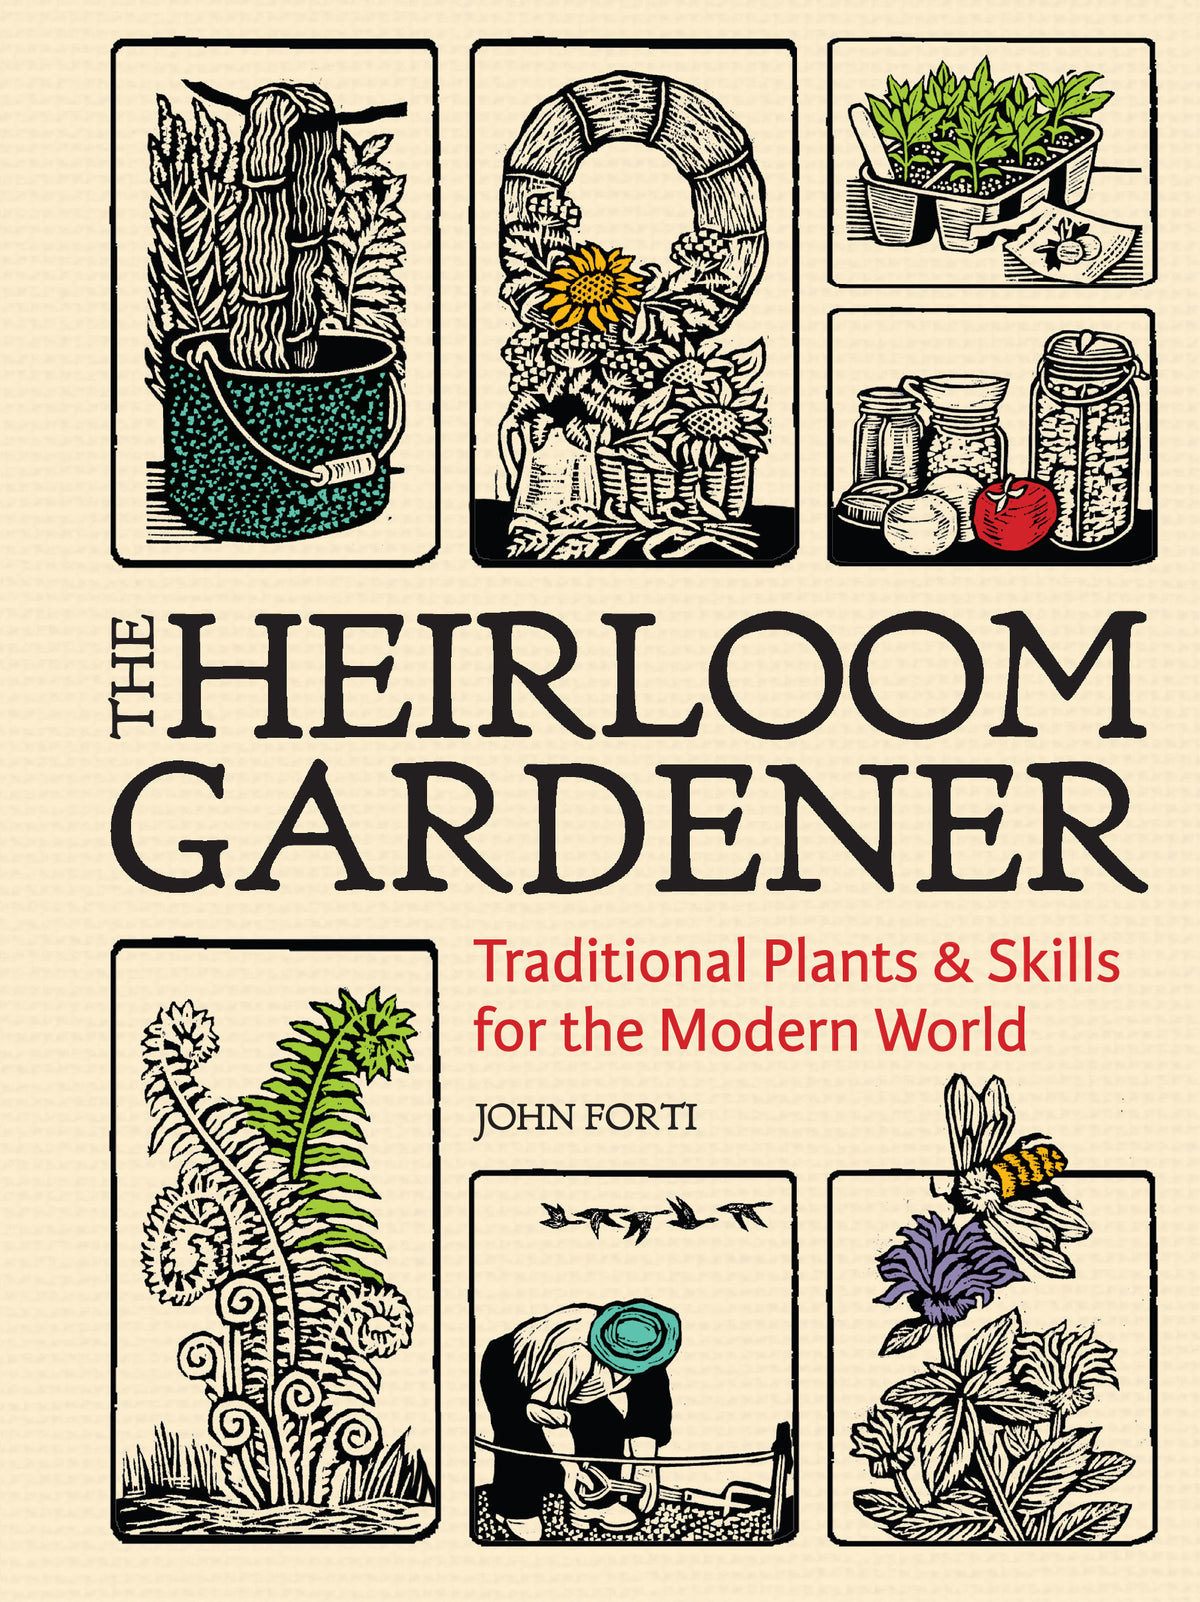 Heirloom Gardener by John Forti